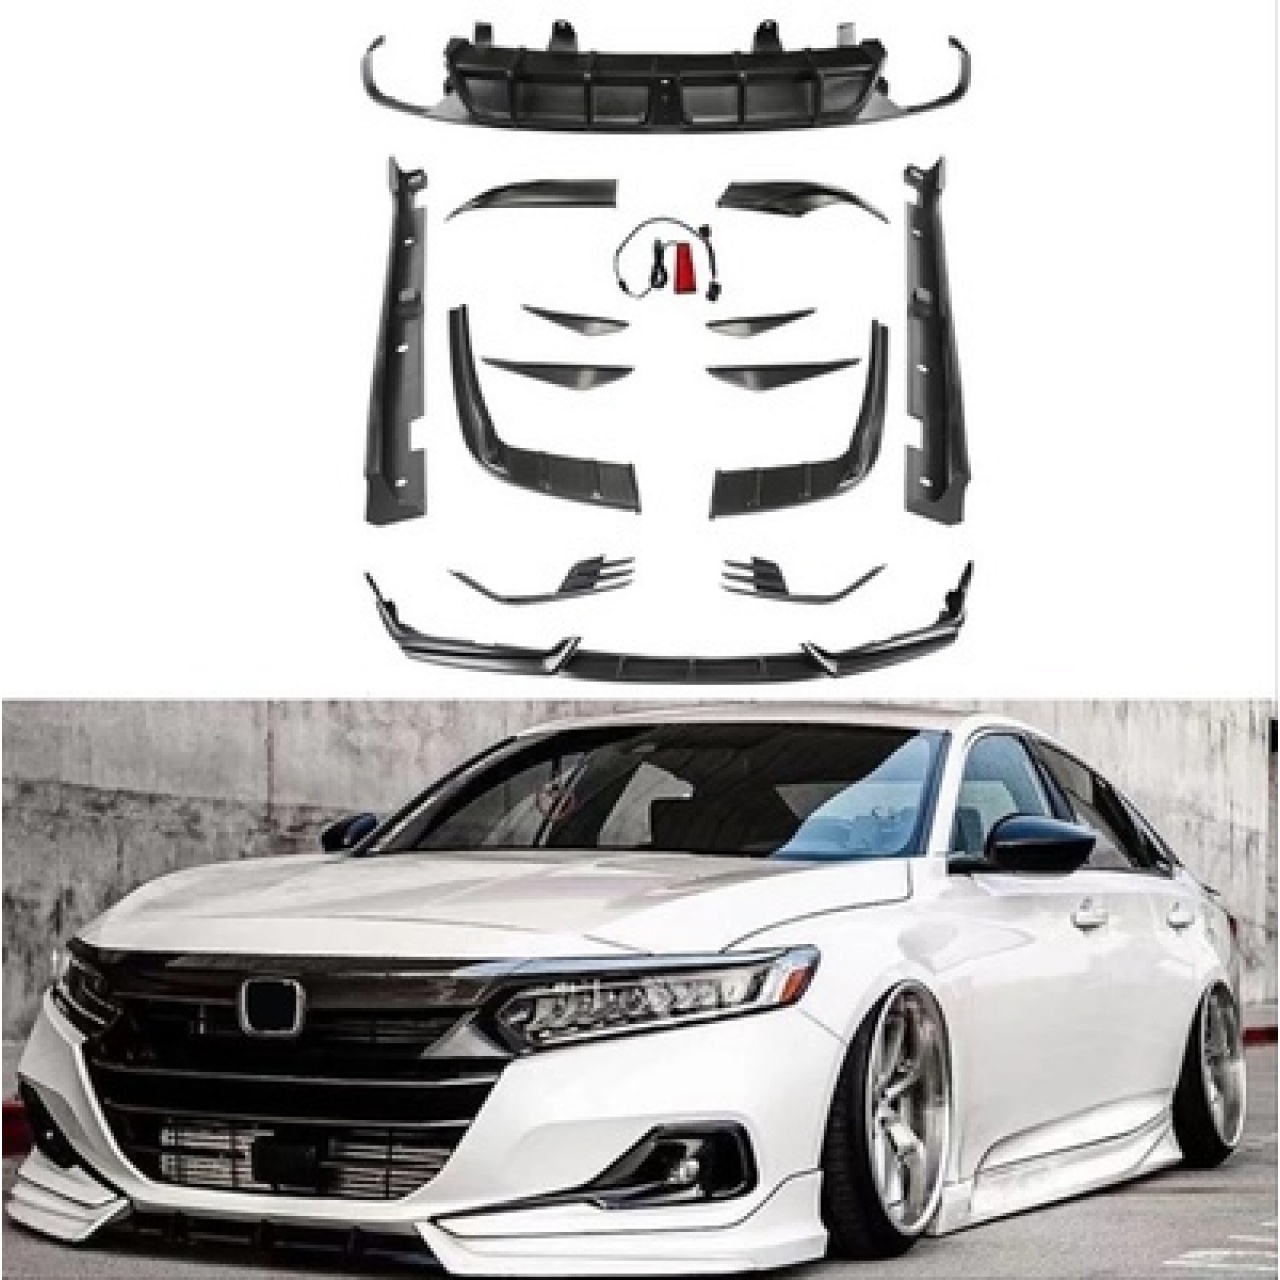 Honda Accord Body Kit (YOFER DESIGN)